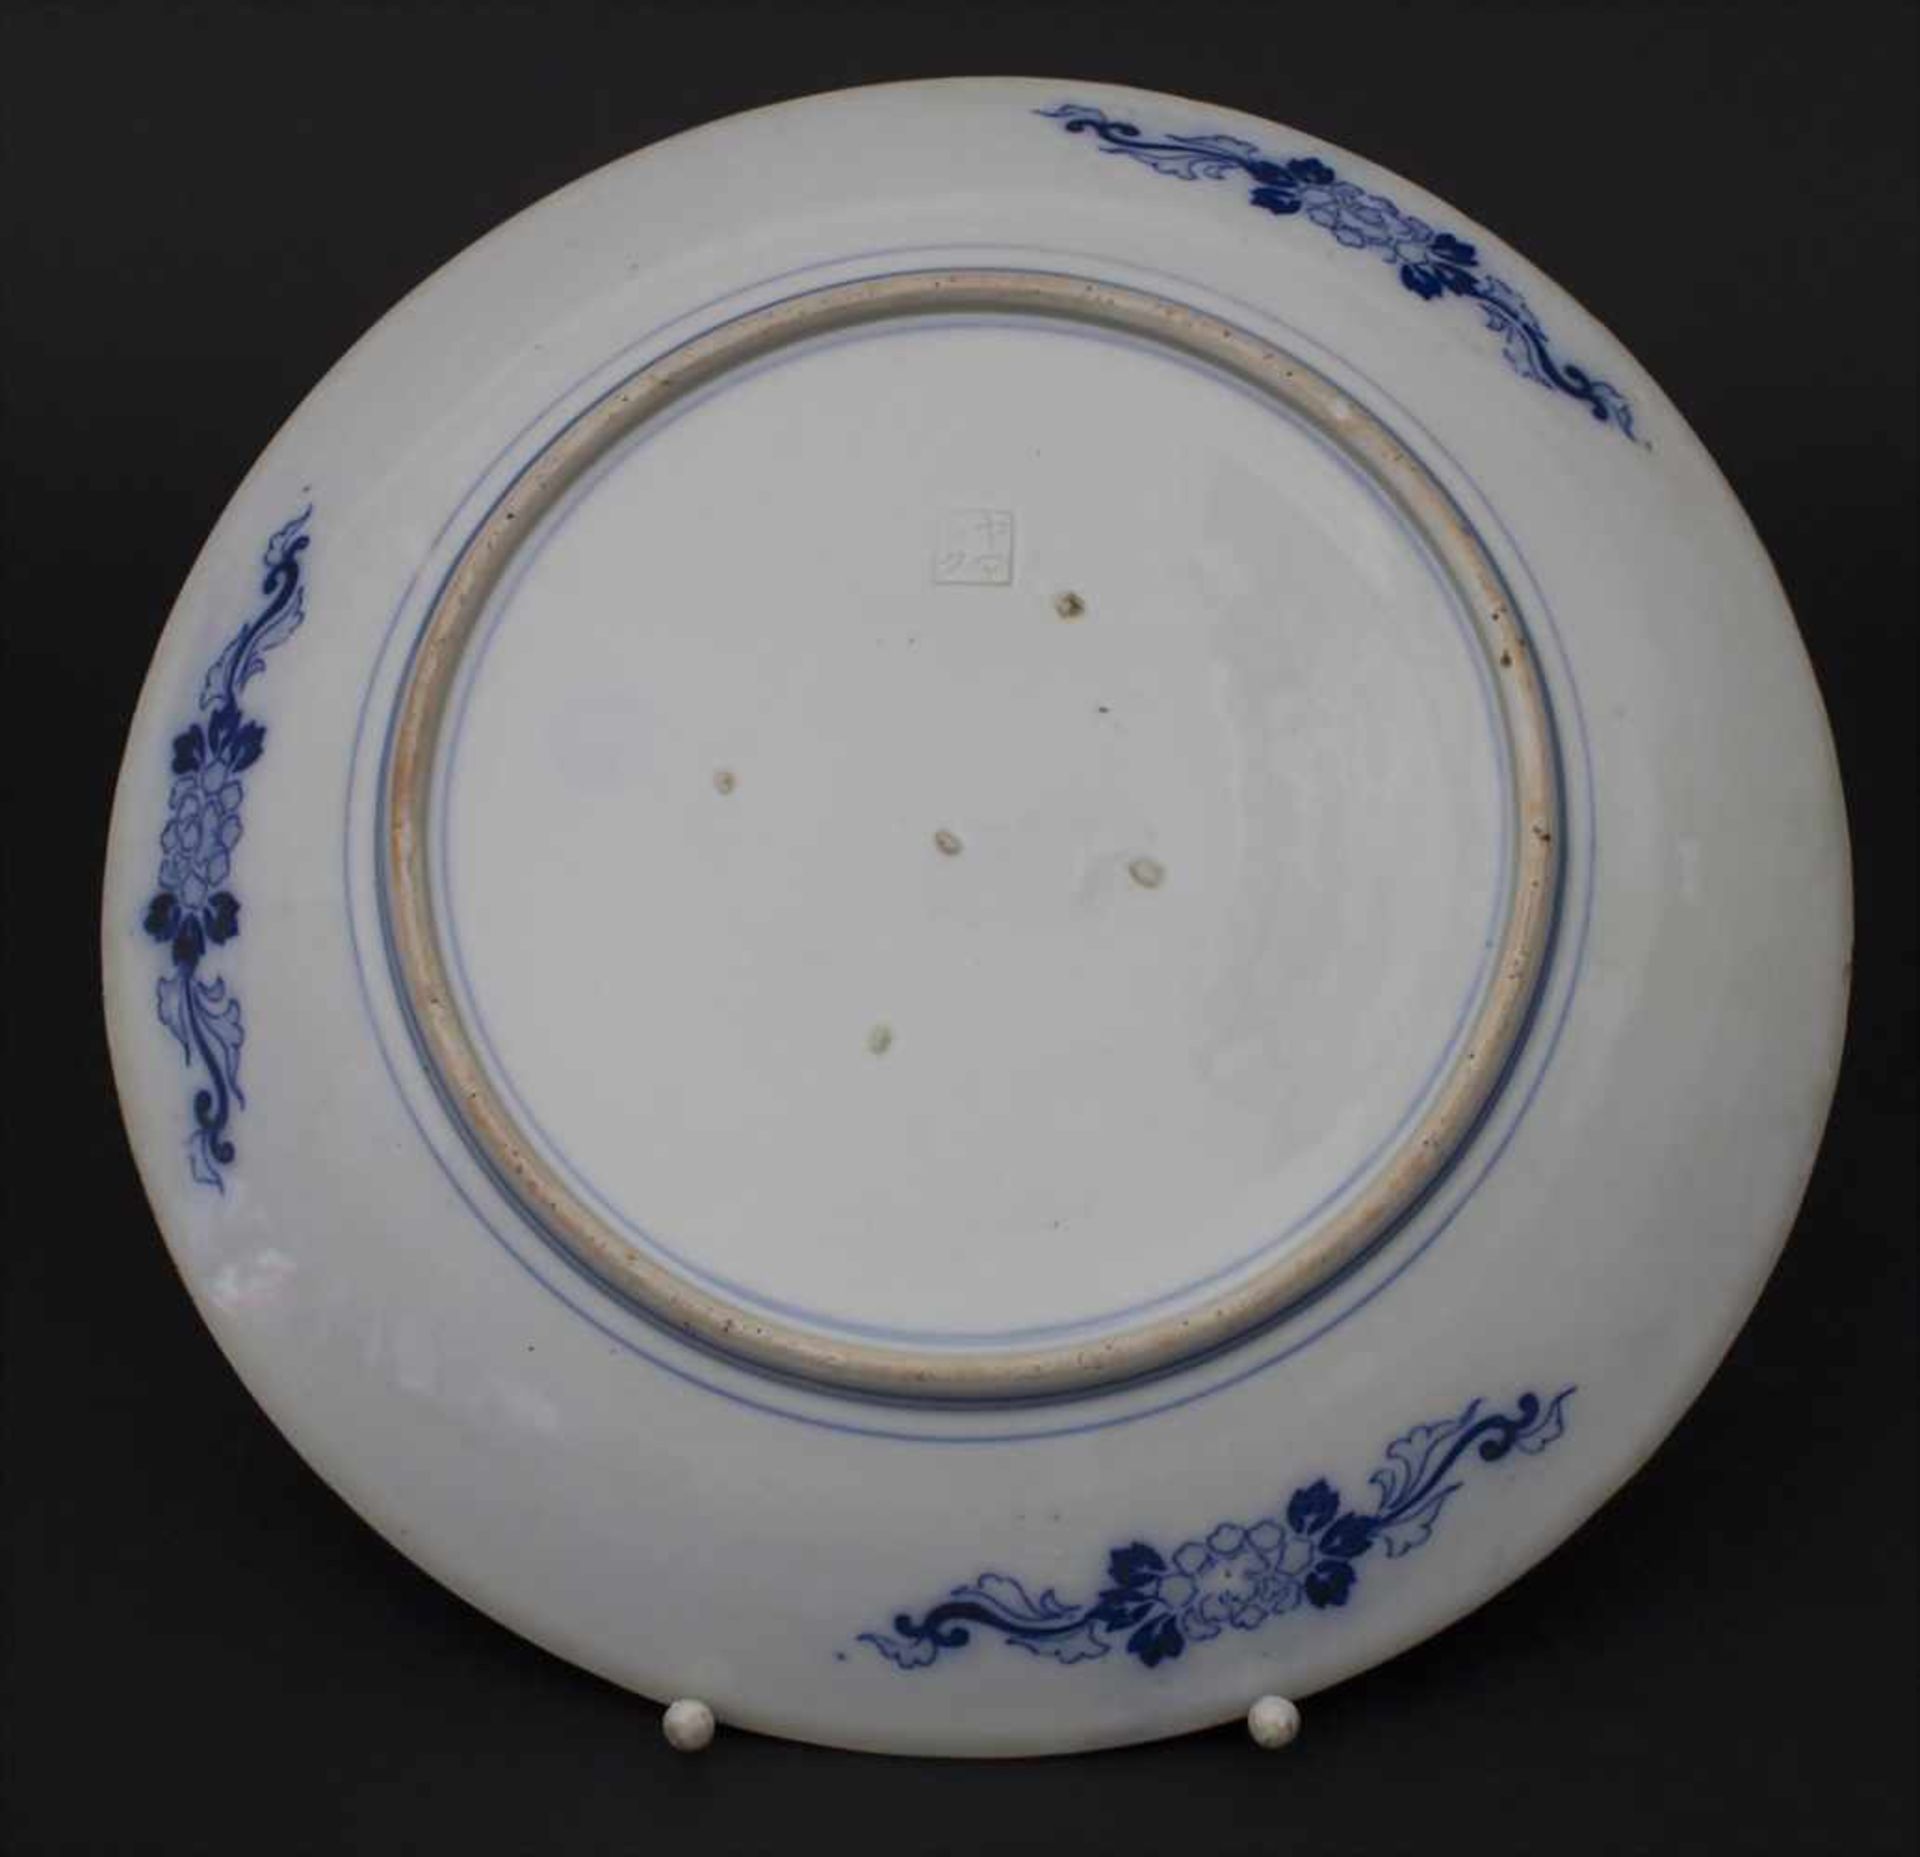 Große Platte / A large plate, Japan, um 1900Material: Porzellan, blau bemalt, glasiert, Rand braun - Bild 5 aus 7